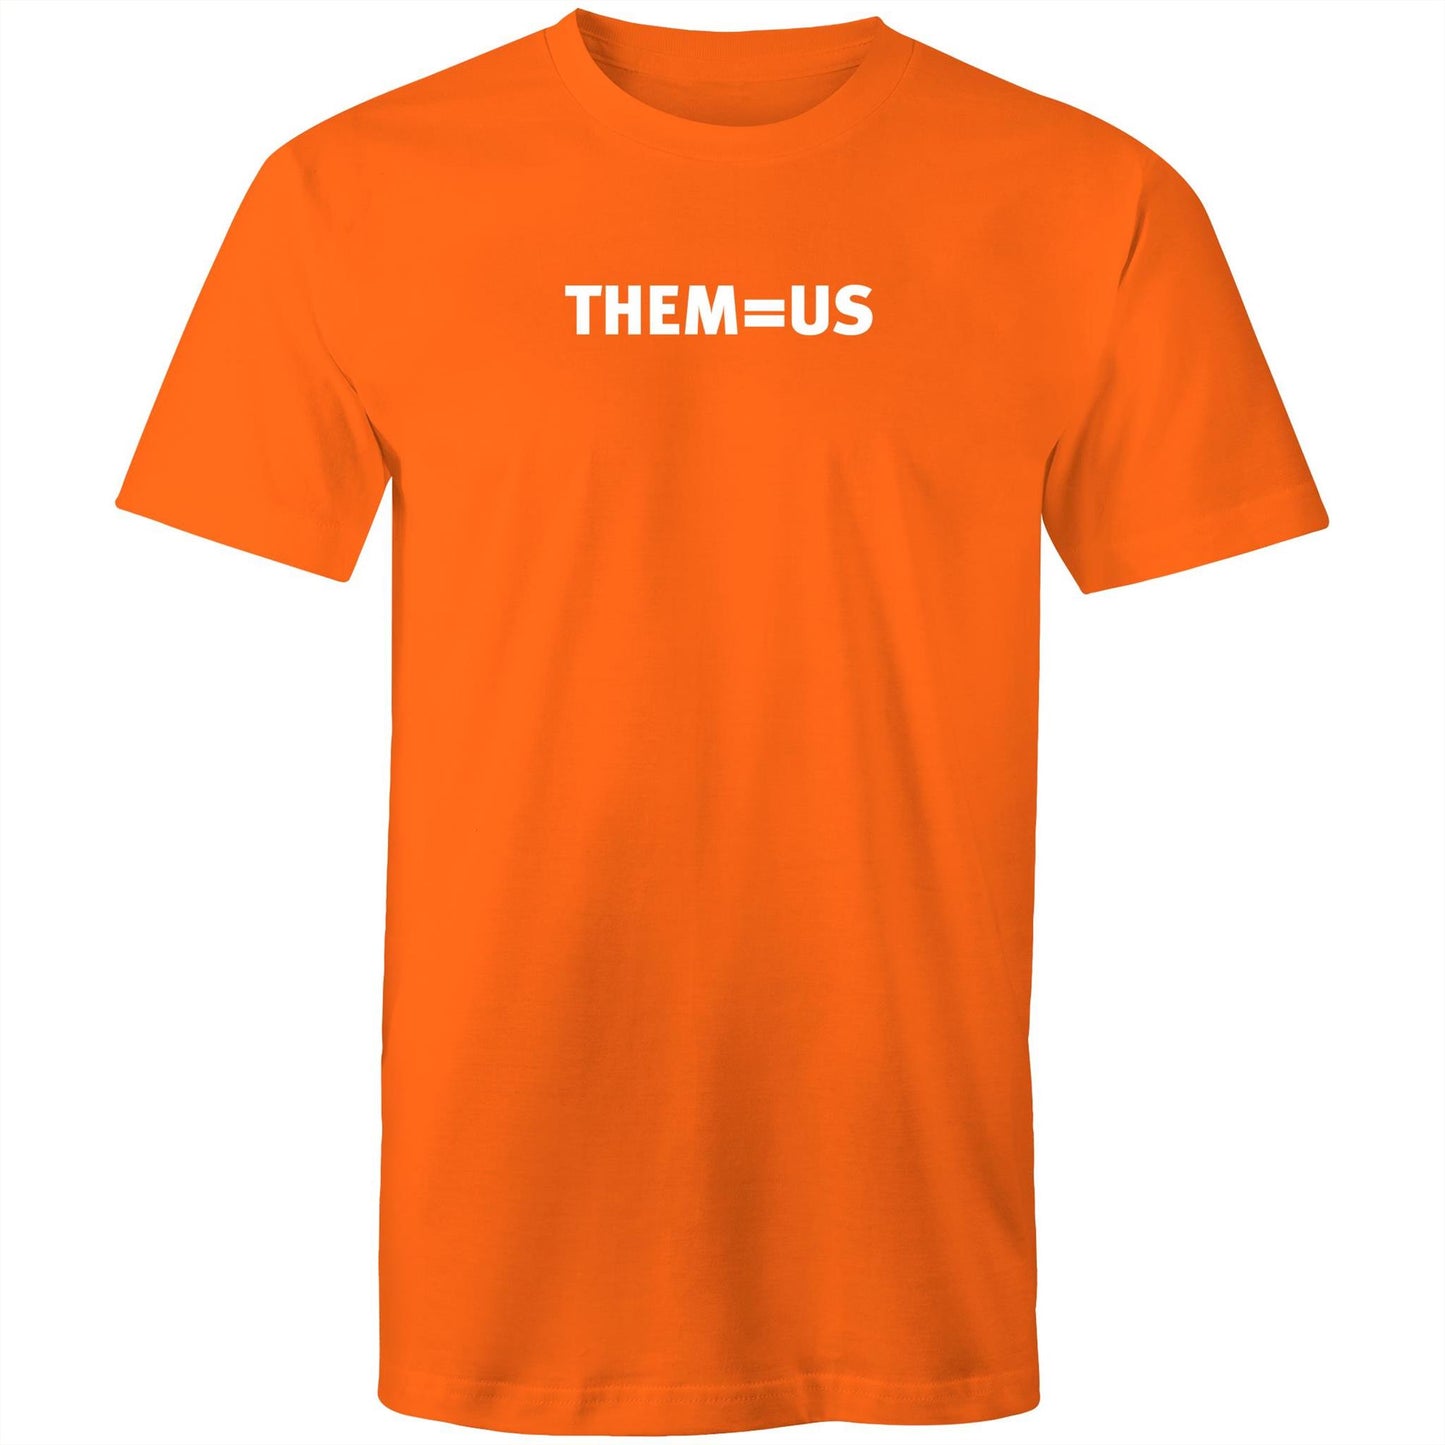 THEM=US T Shirts for Men (Unisex)